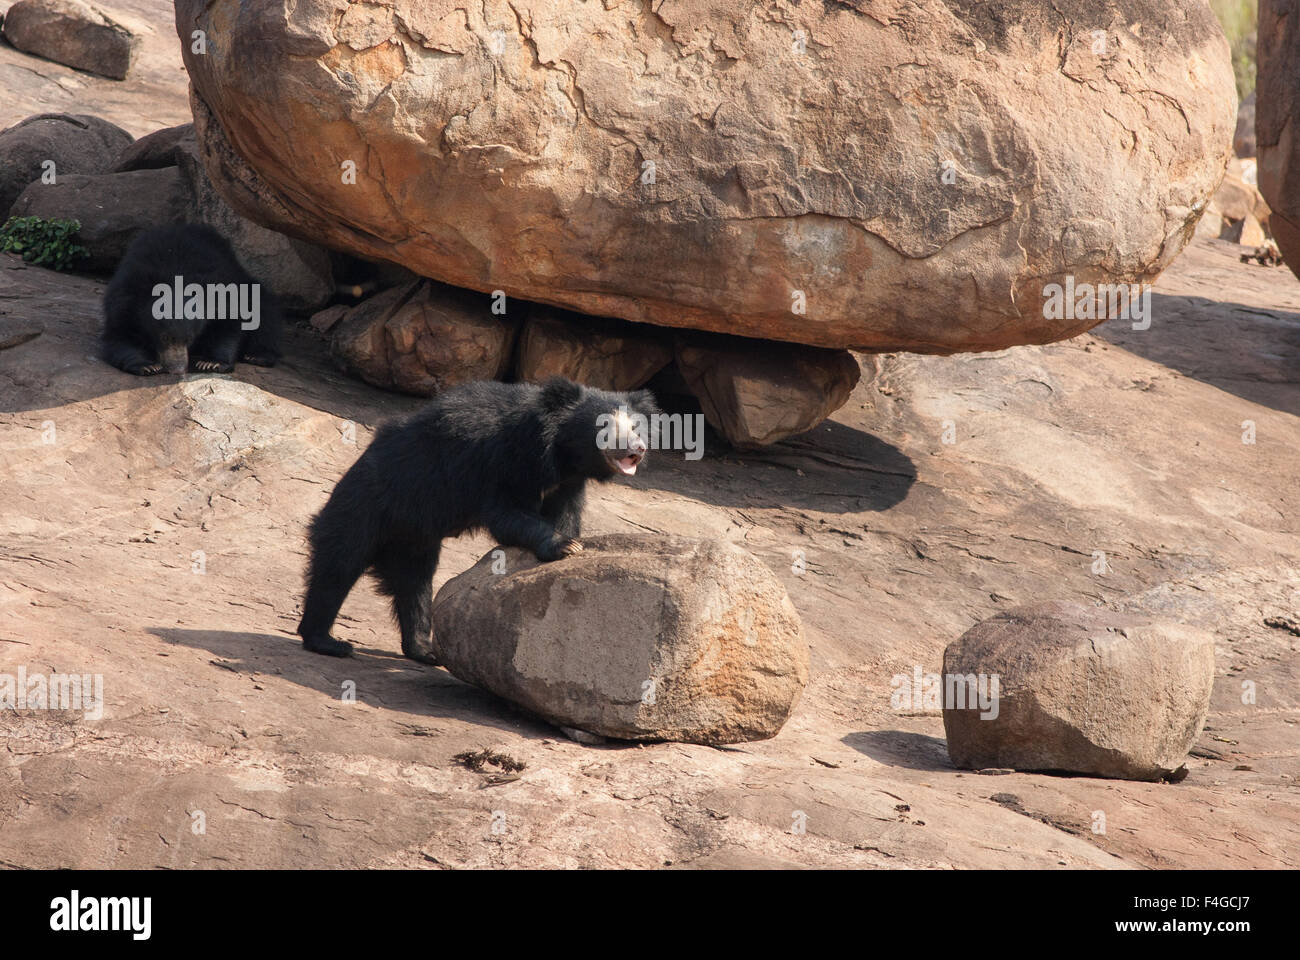 An Indian Sloth bear cub strikes a pose at Daroji bear sanctuary, Karnataka, india Stock Photo